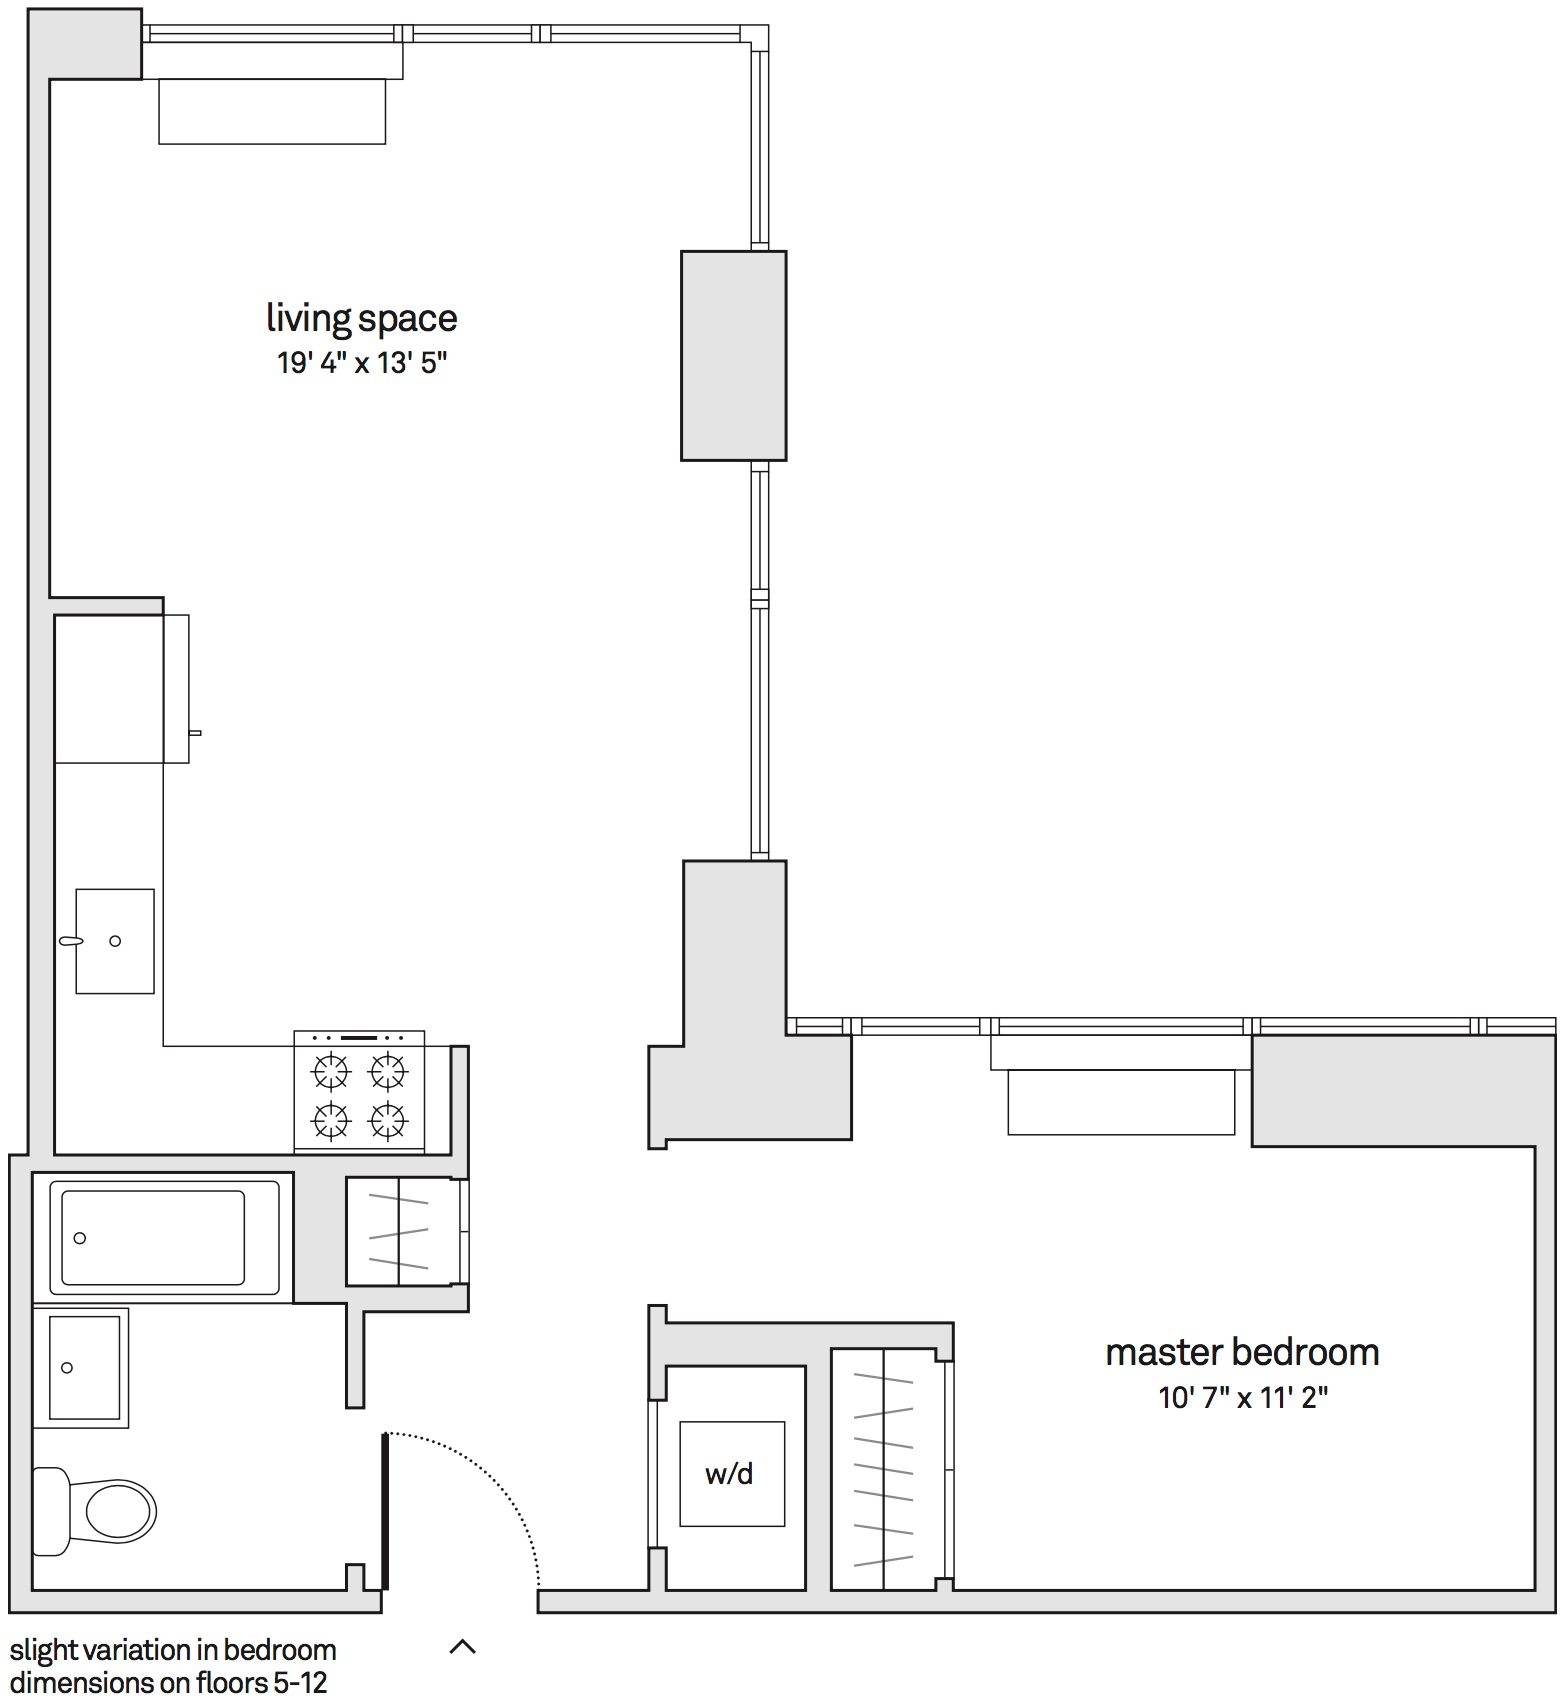 Floorplan of unit 12E.